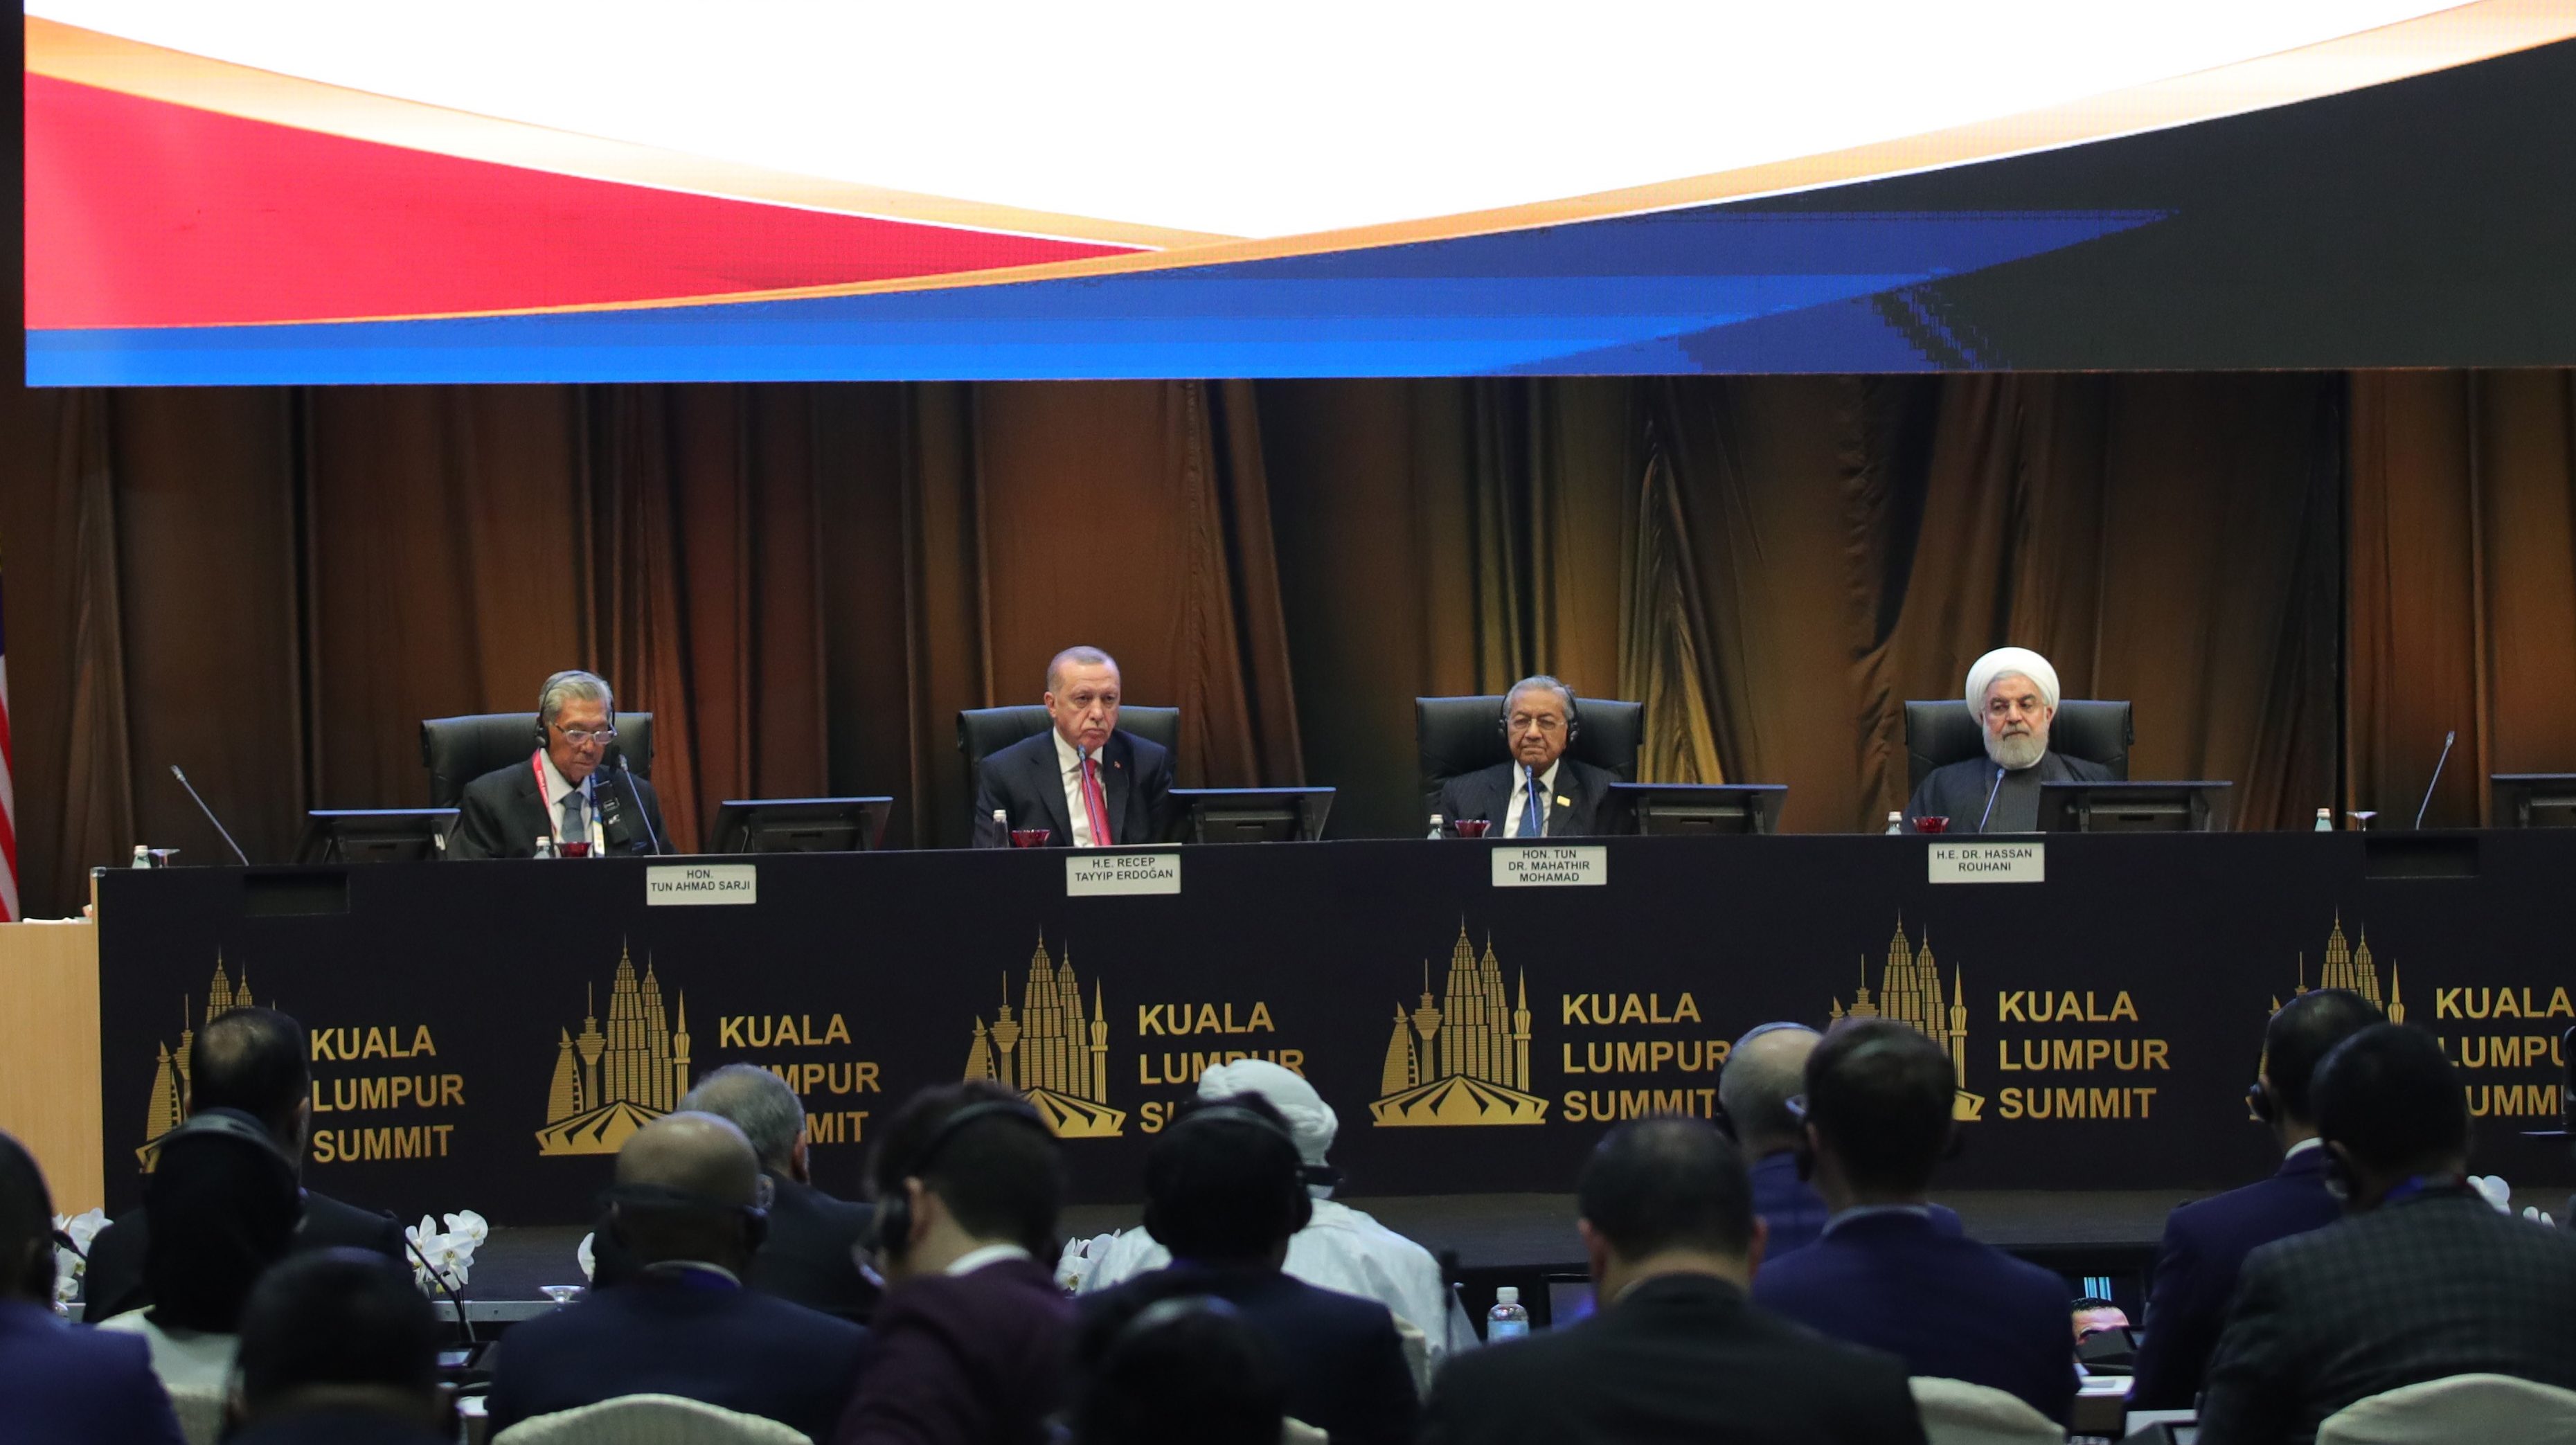 Kuala Lumpur Summit: Play to Mislead World